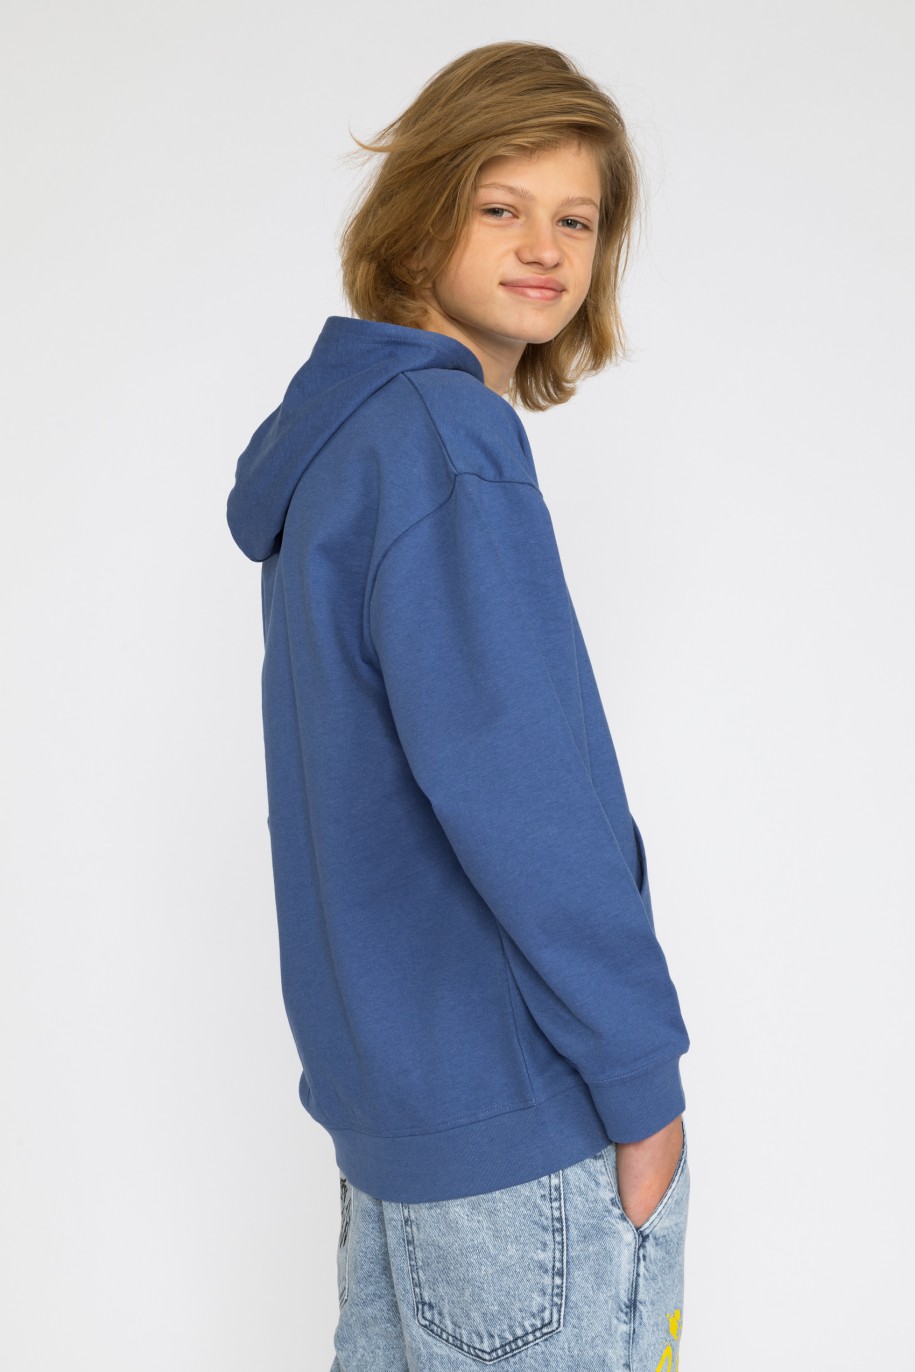 Granatowa bluza z kapturem dla chłopaka SURE - 33312